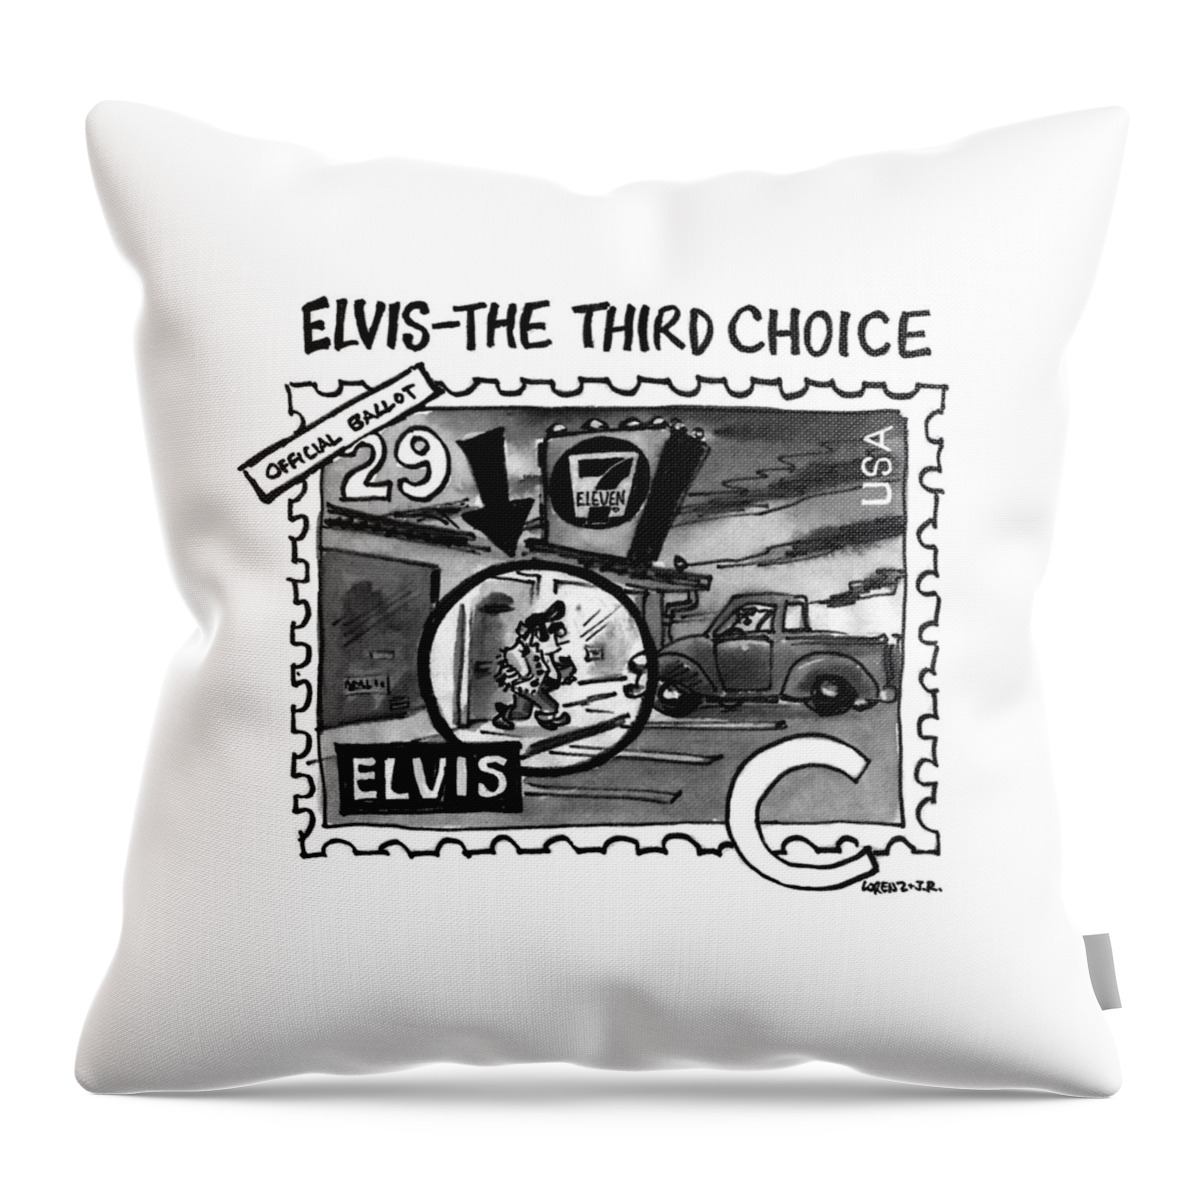 Elvis - The Third Choice Throw Pillow